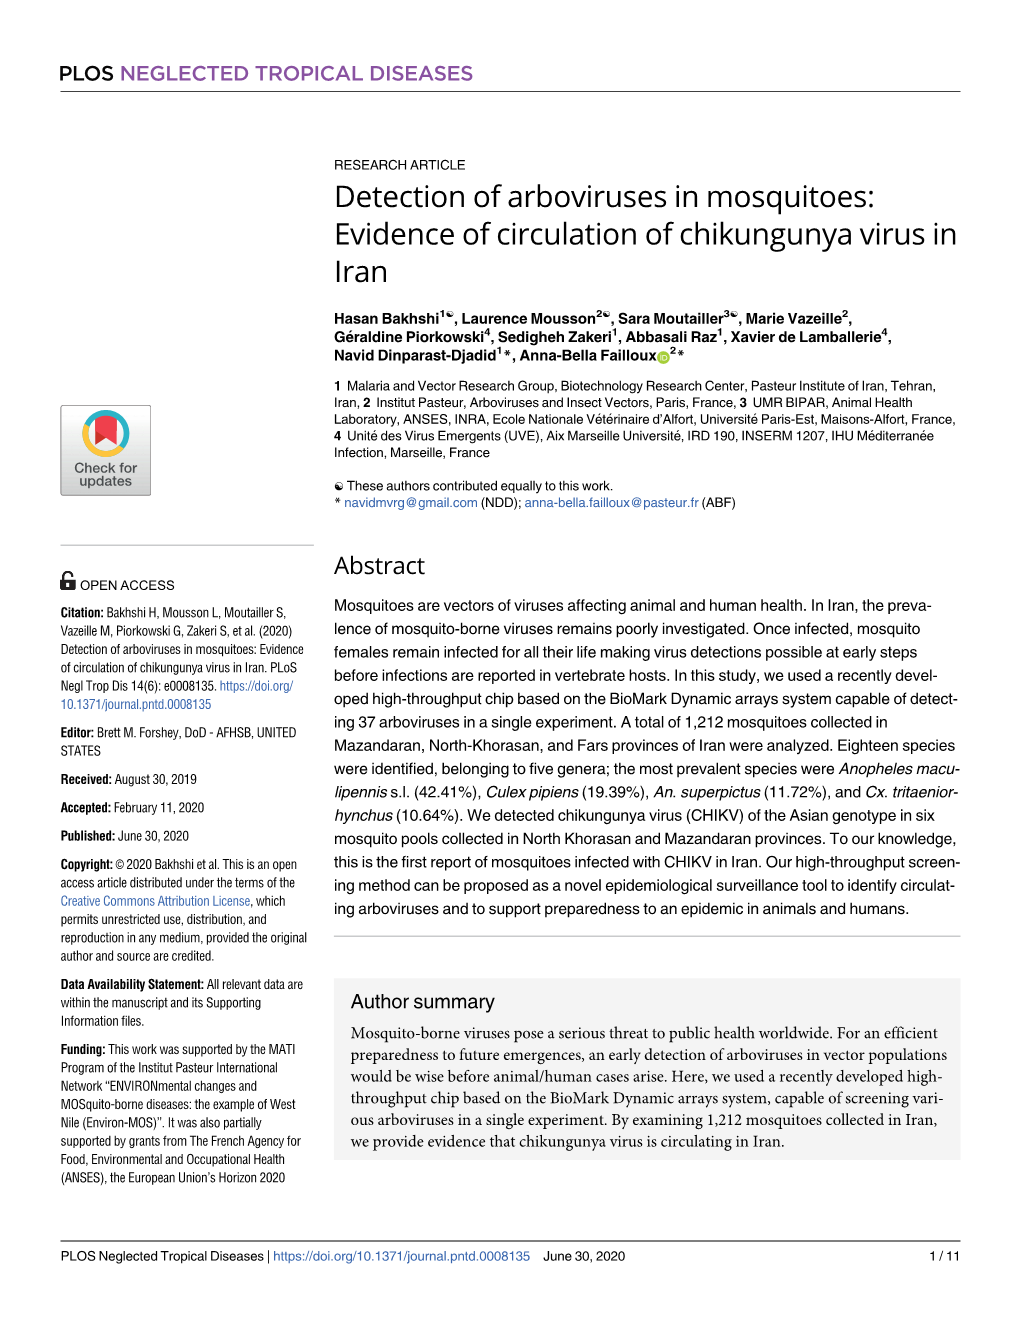 Detection of Arboviruses in Mosquitoes: Evidence of Circulation of Chikungunya Virus in Iran